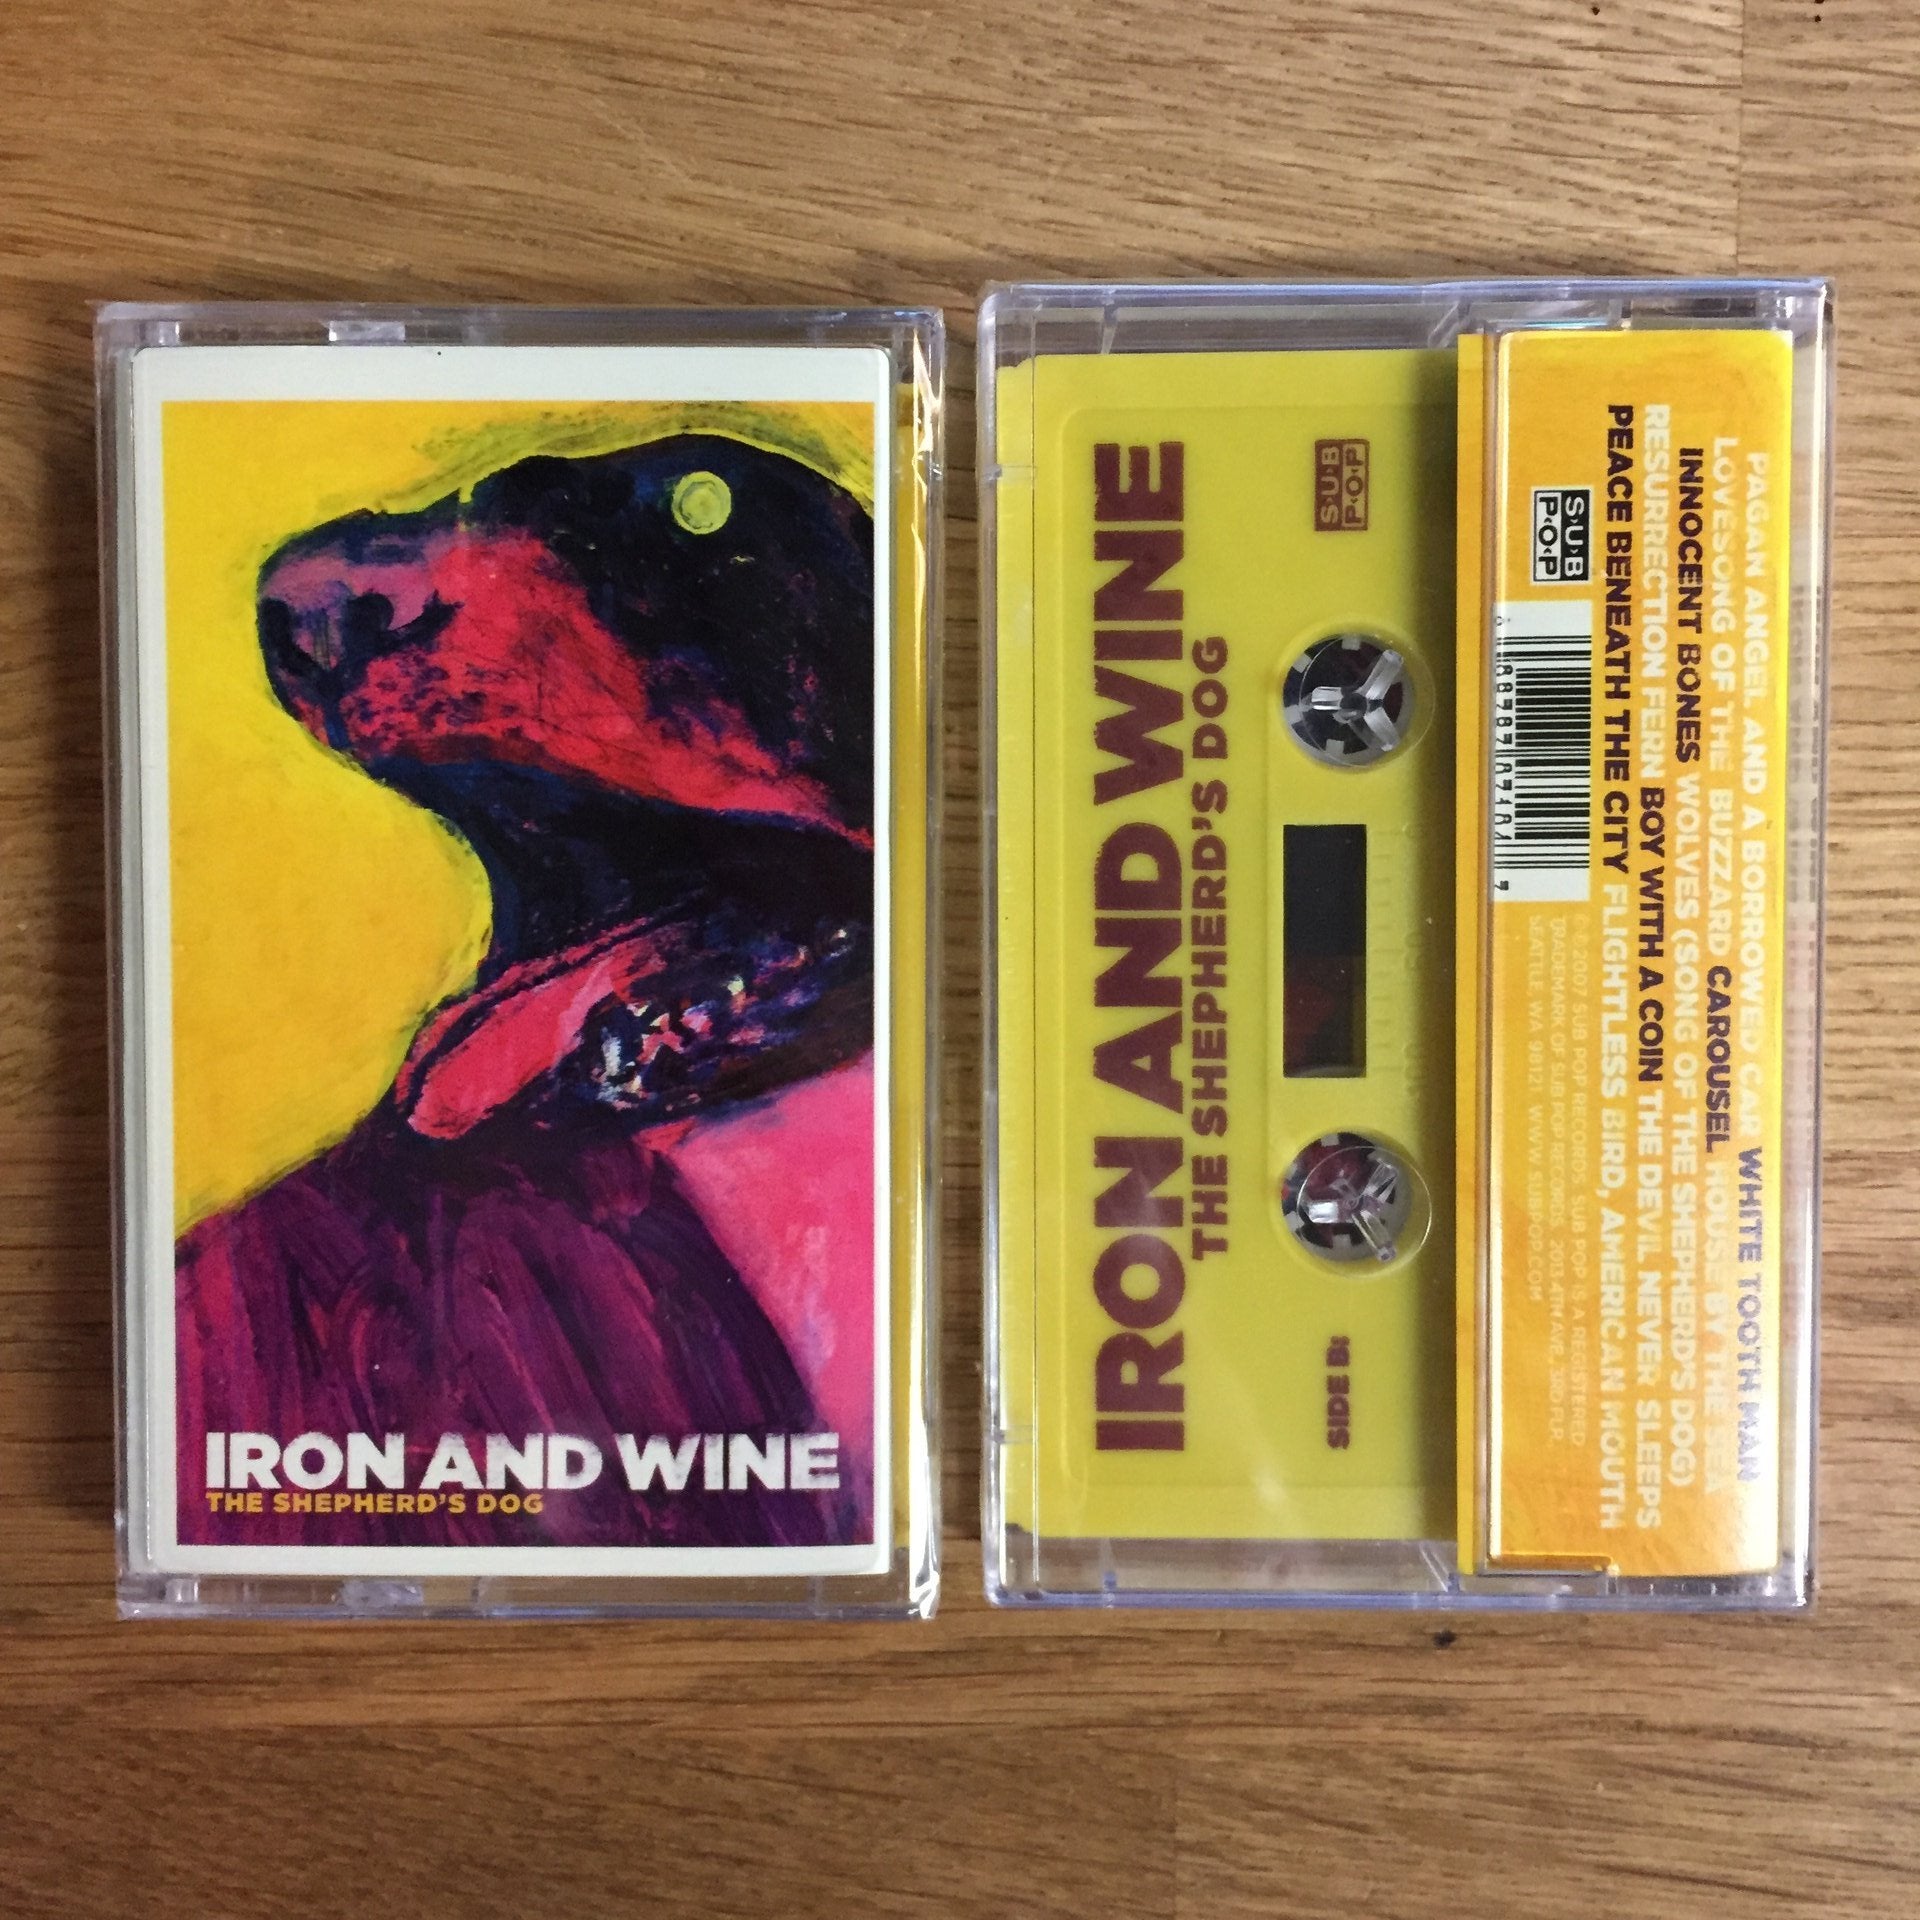 Iron & Wine ‎– The Shepherd's Dog - New Cassette 2007 Sub Pop Yellow Tape - Indie Folk / Rock